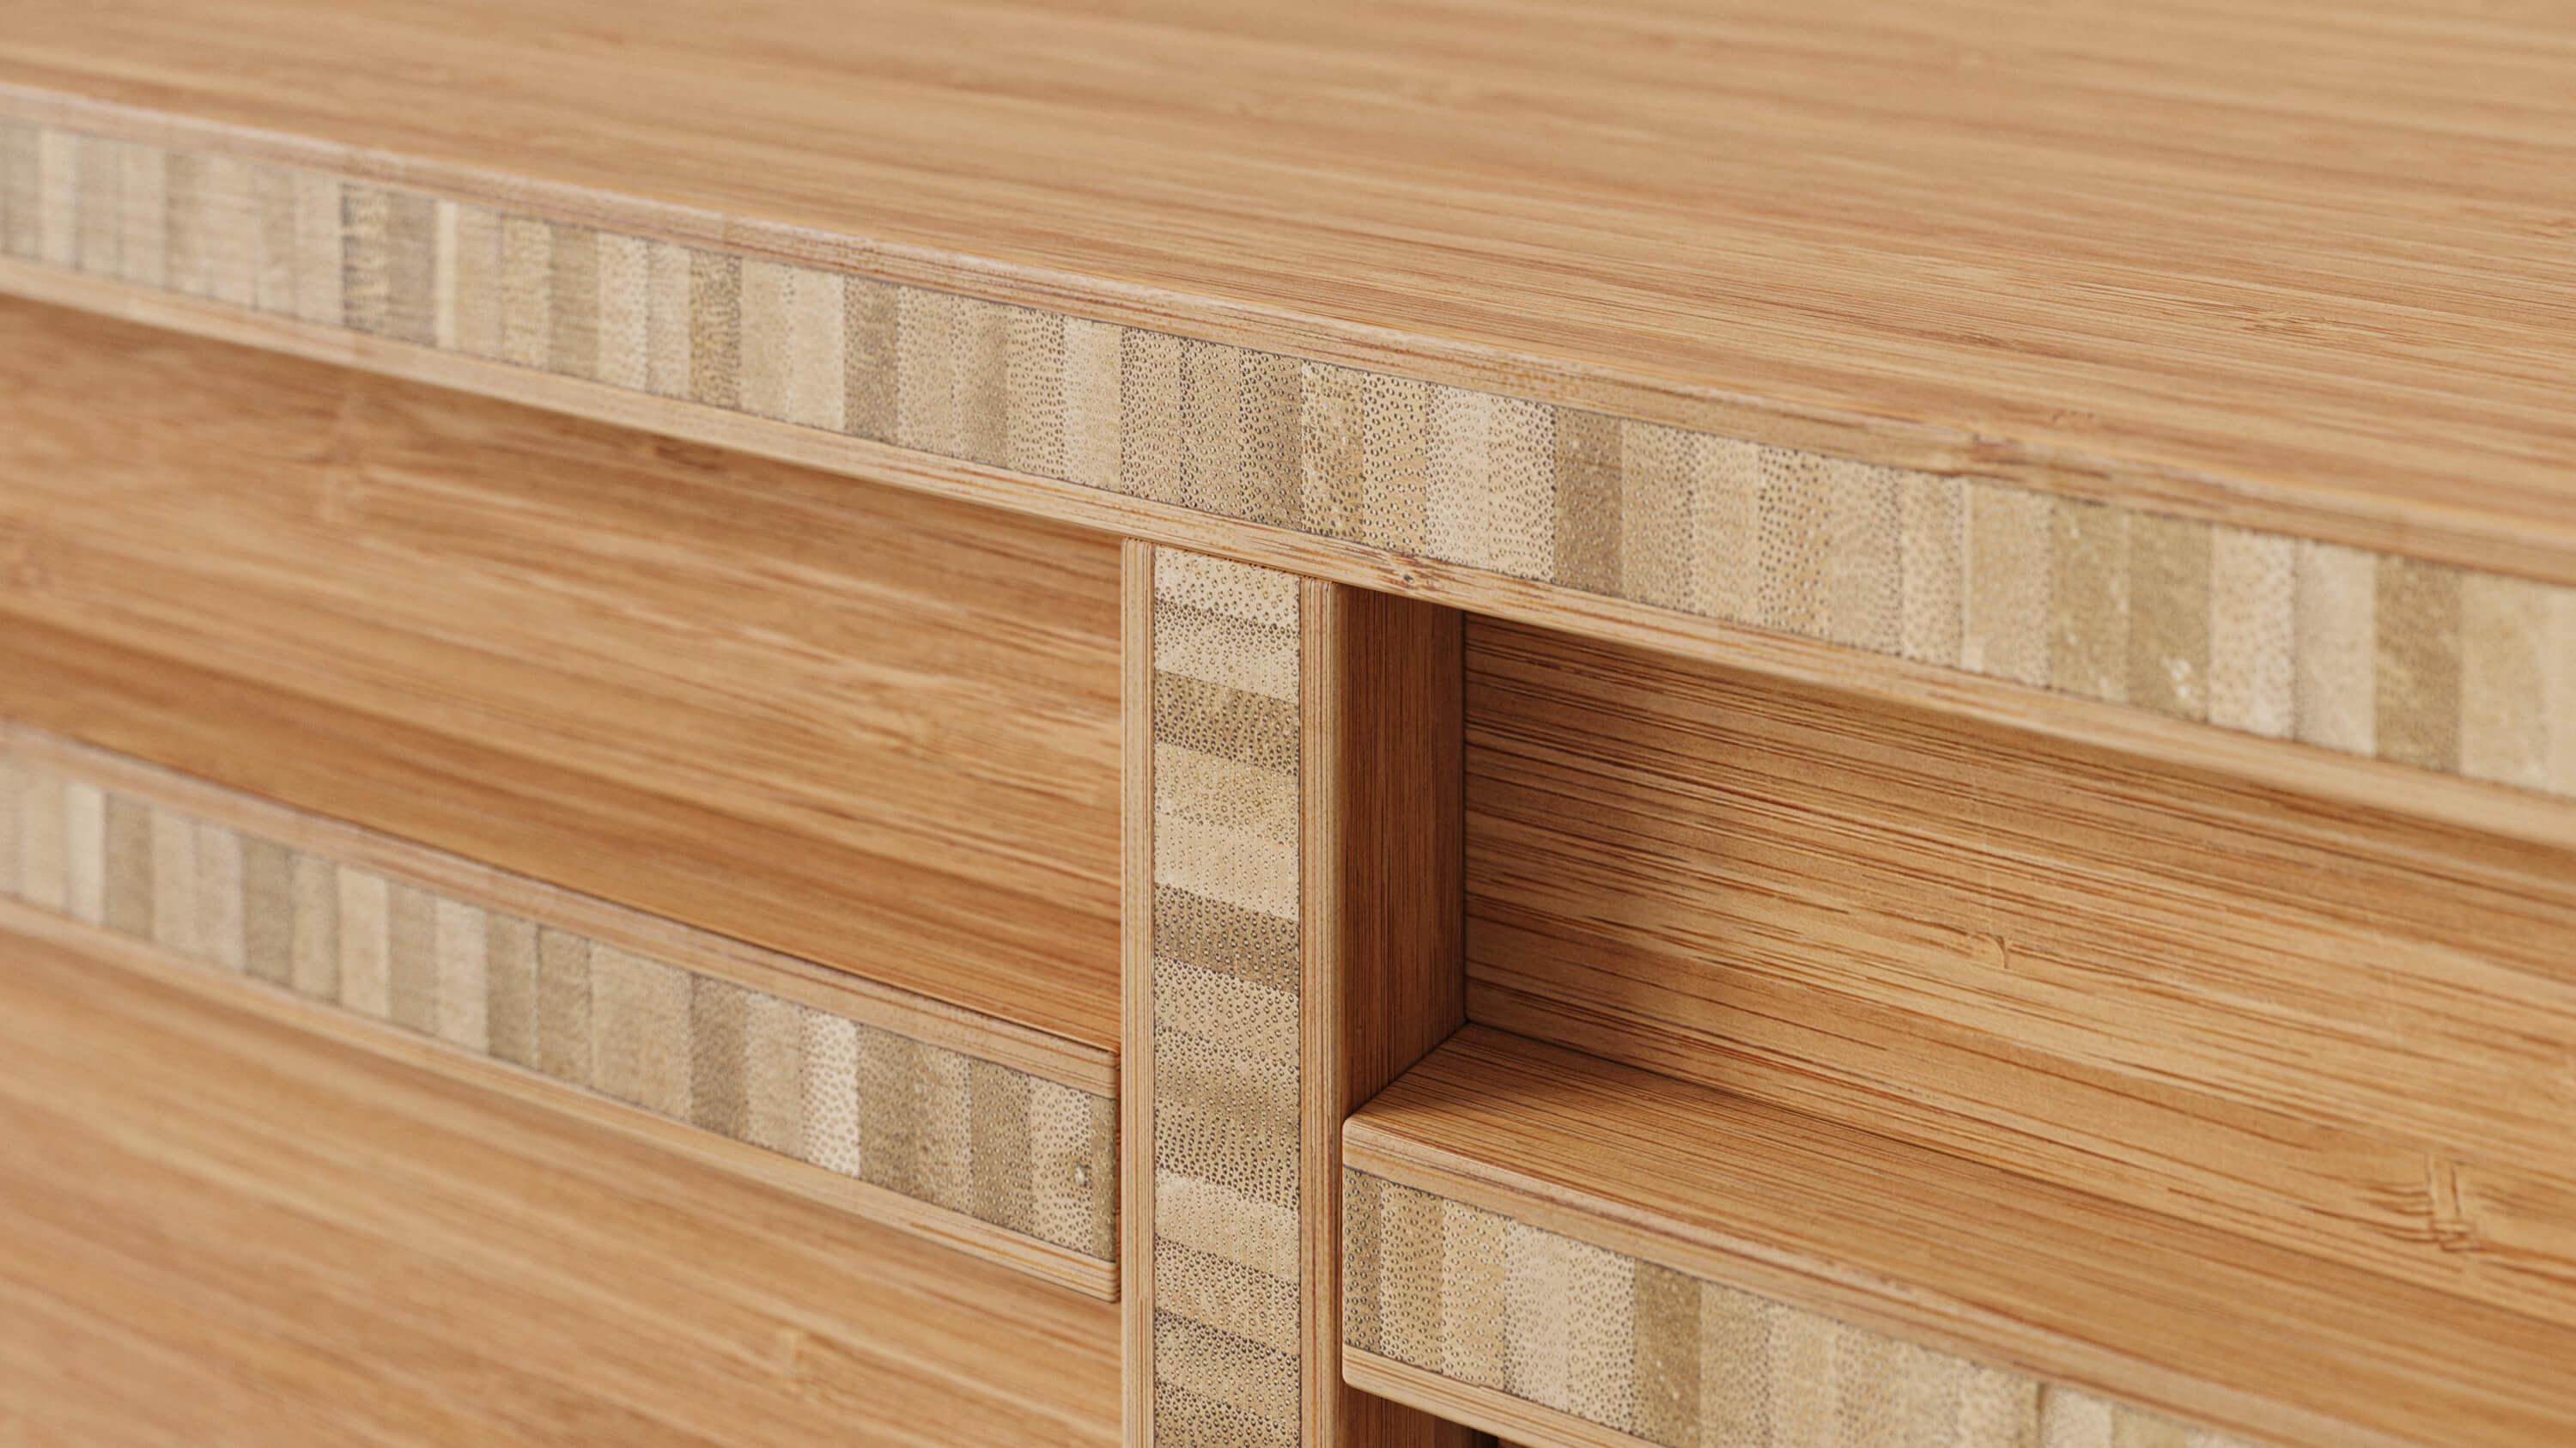 High Quality Seamless Bamboo wood veneer texture